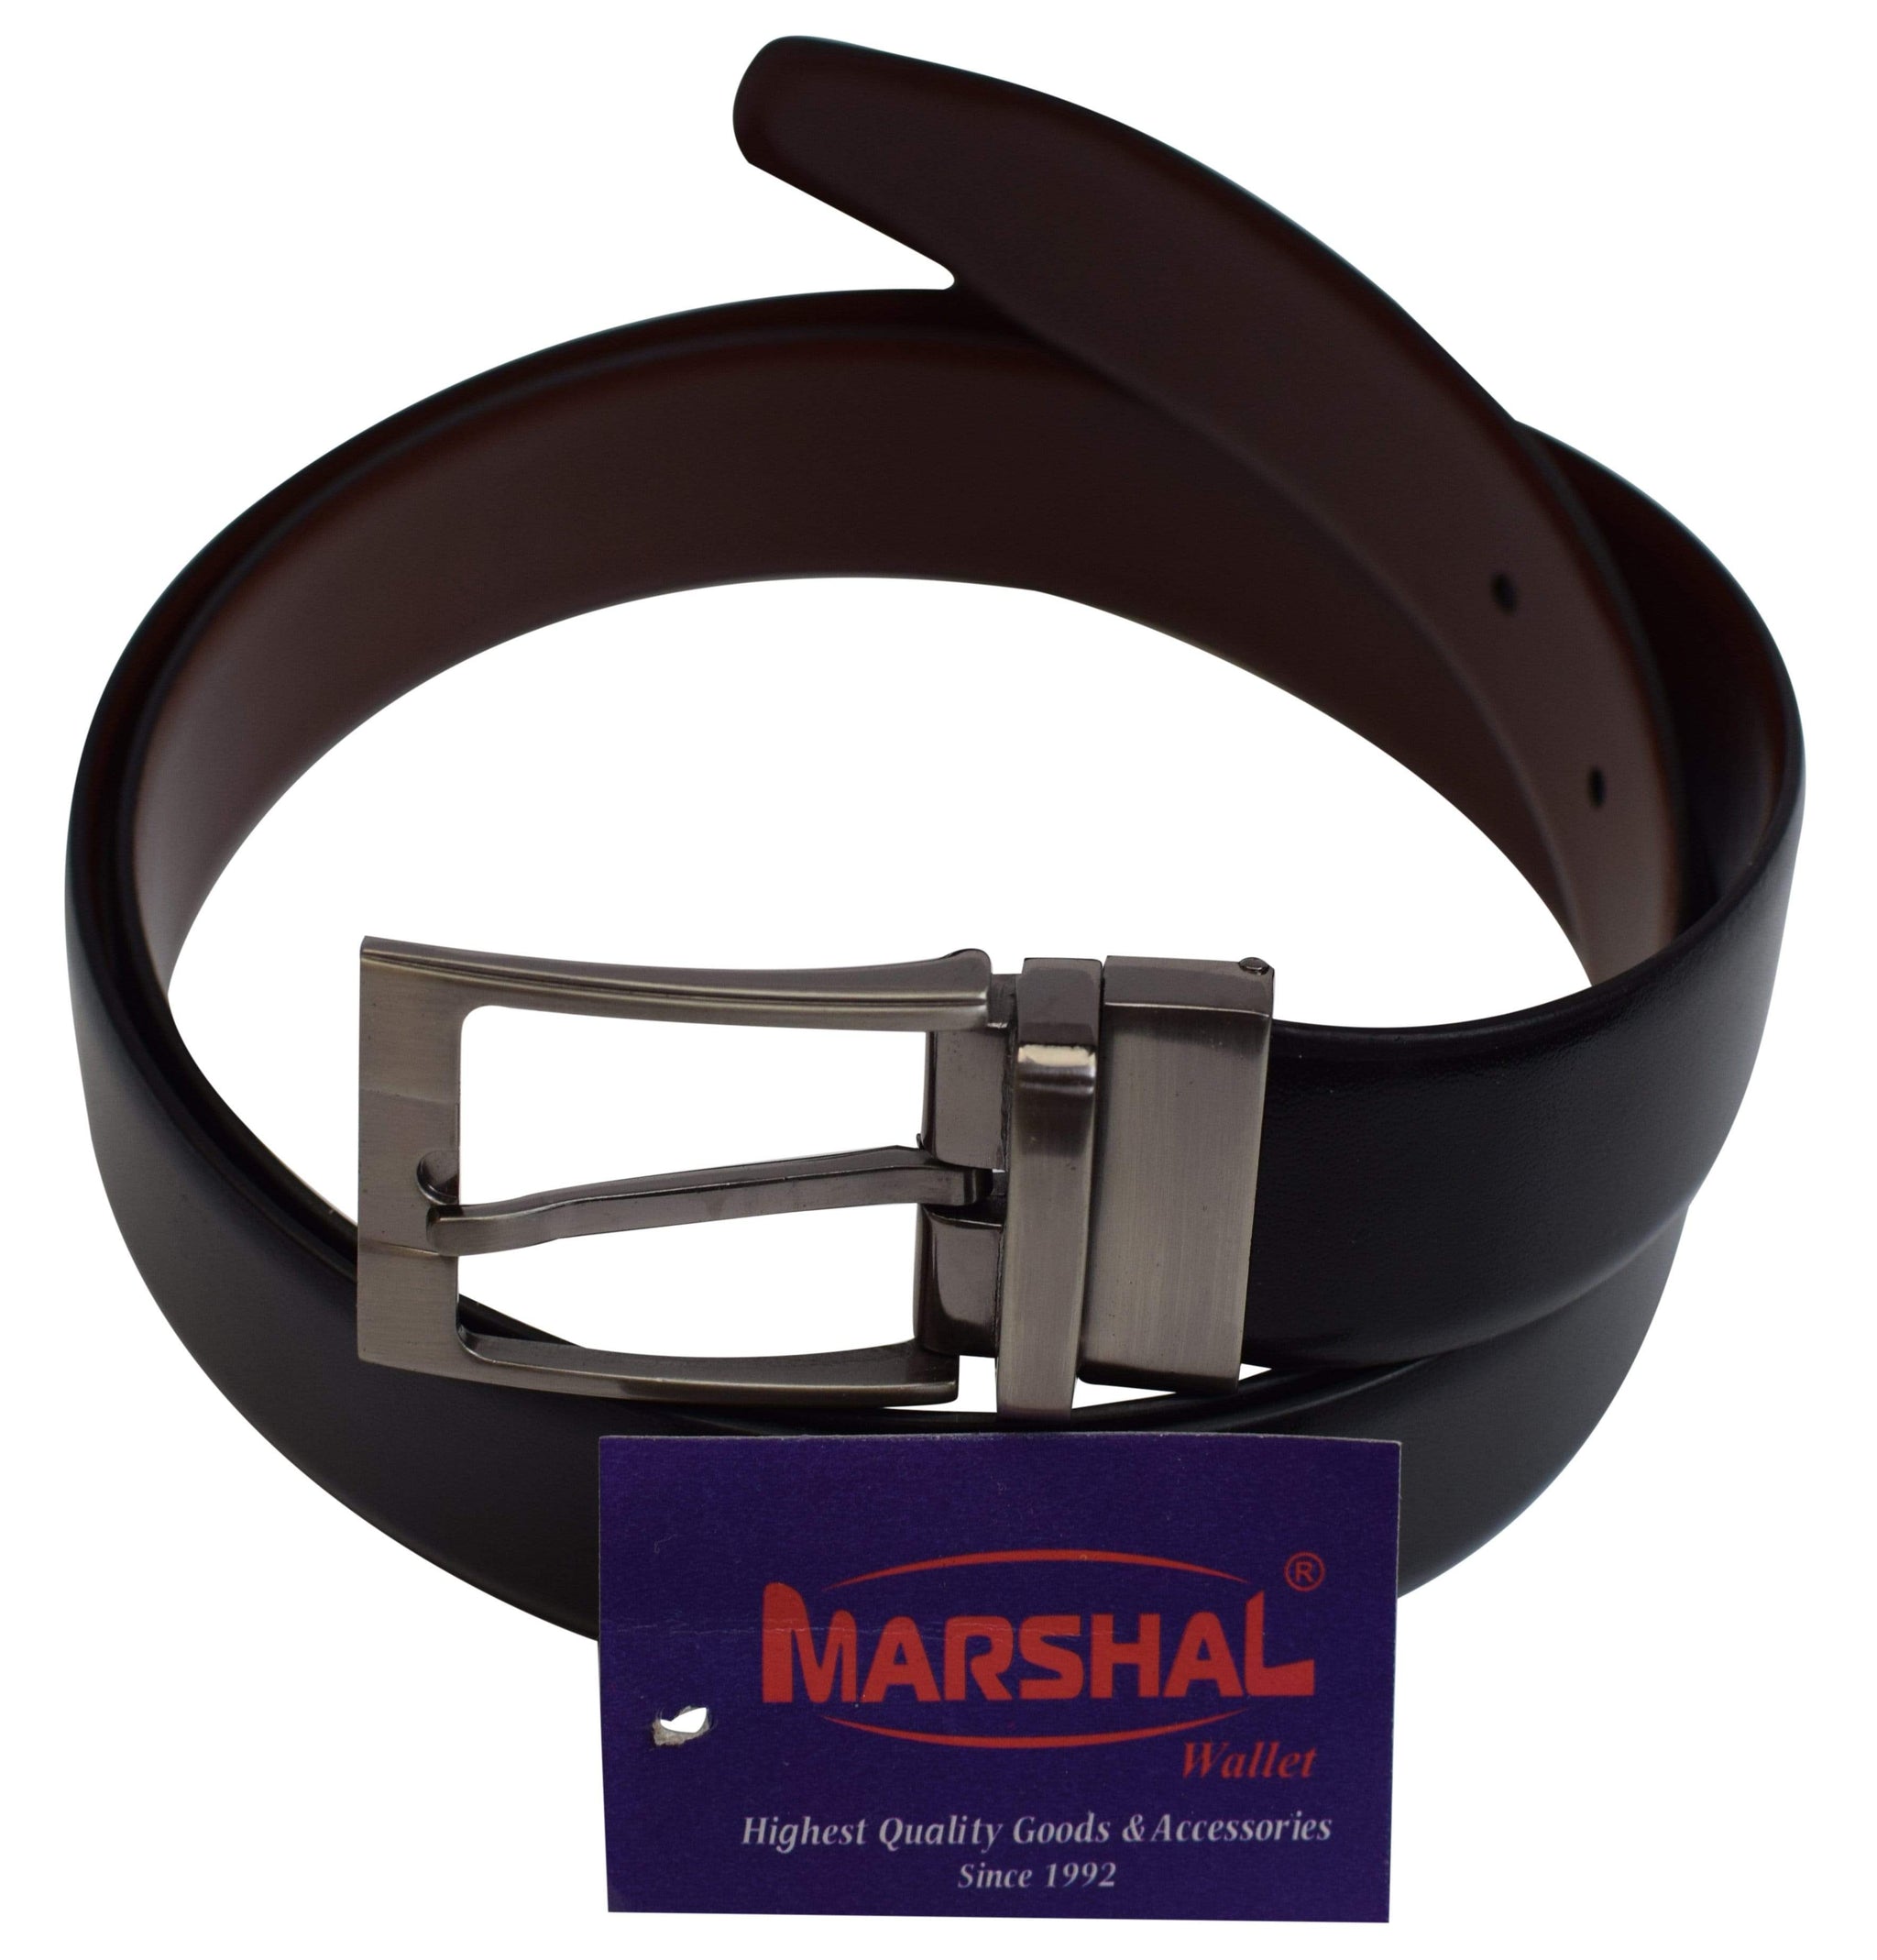 Men's Belts  Mens belts, Belt, Reversible belt